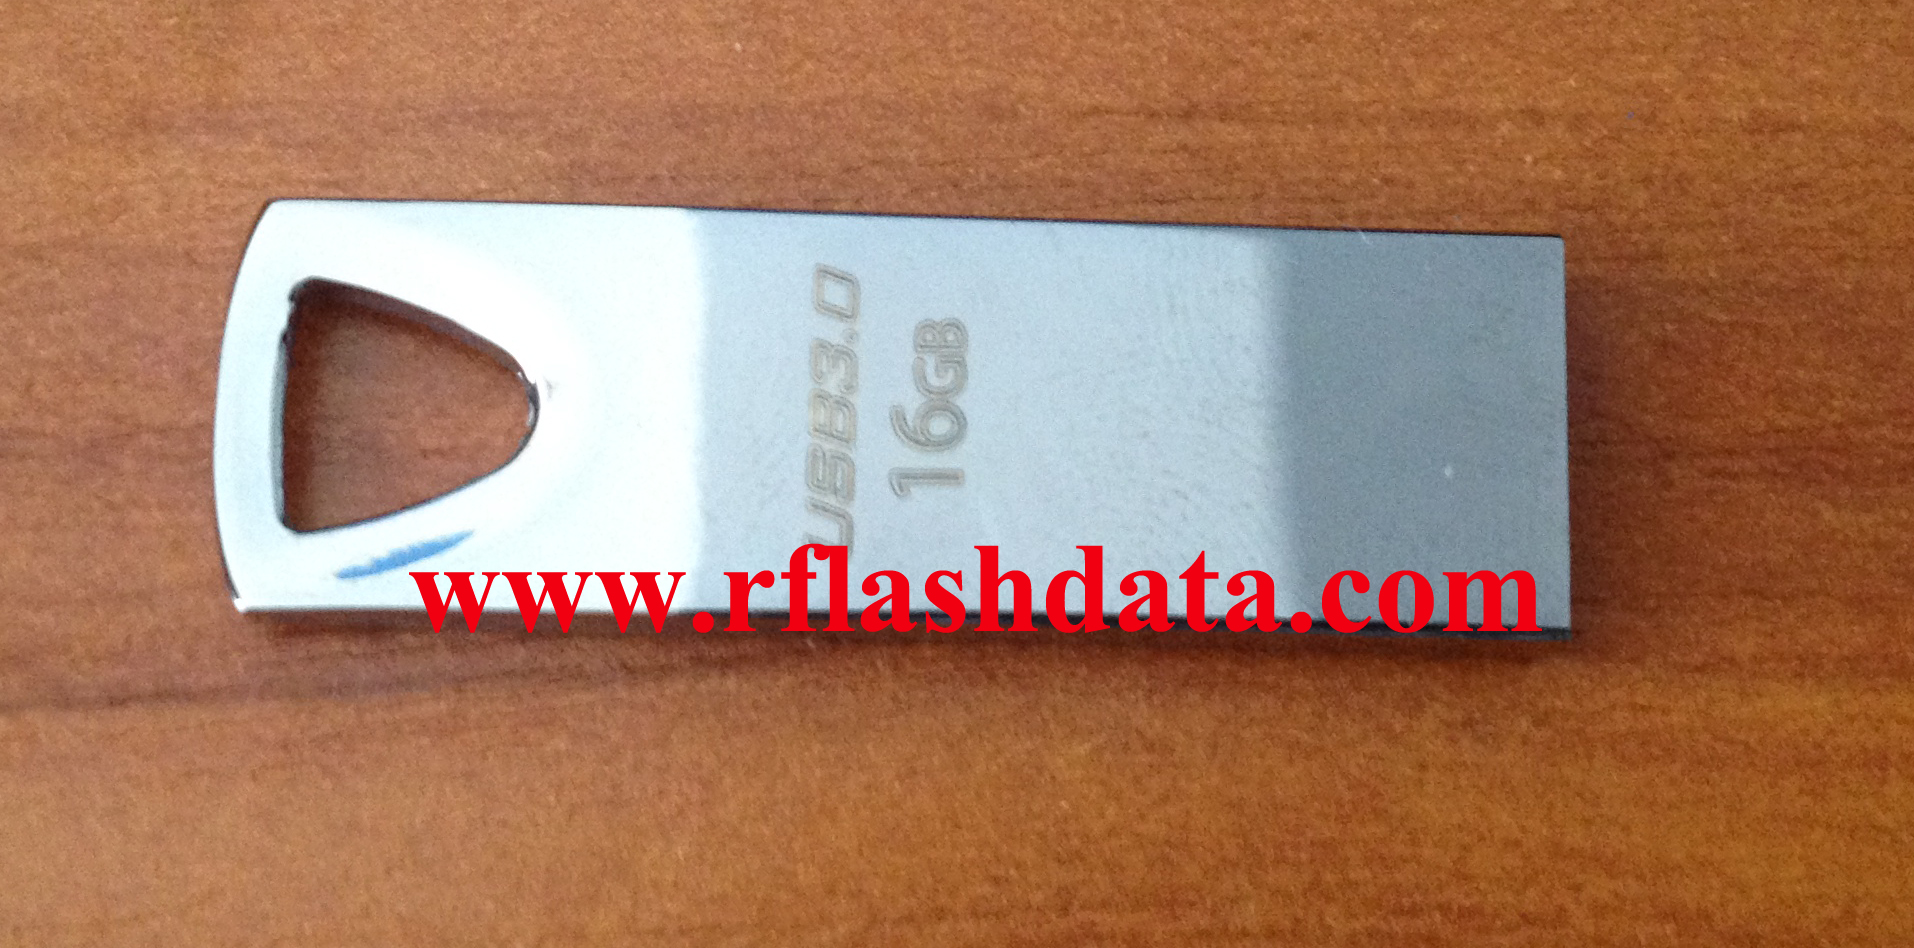 PQI flash drive data recovery